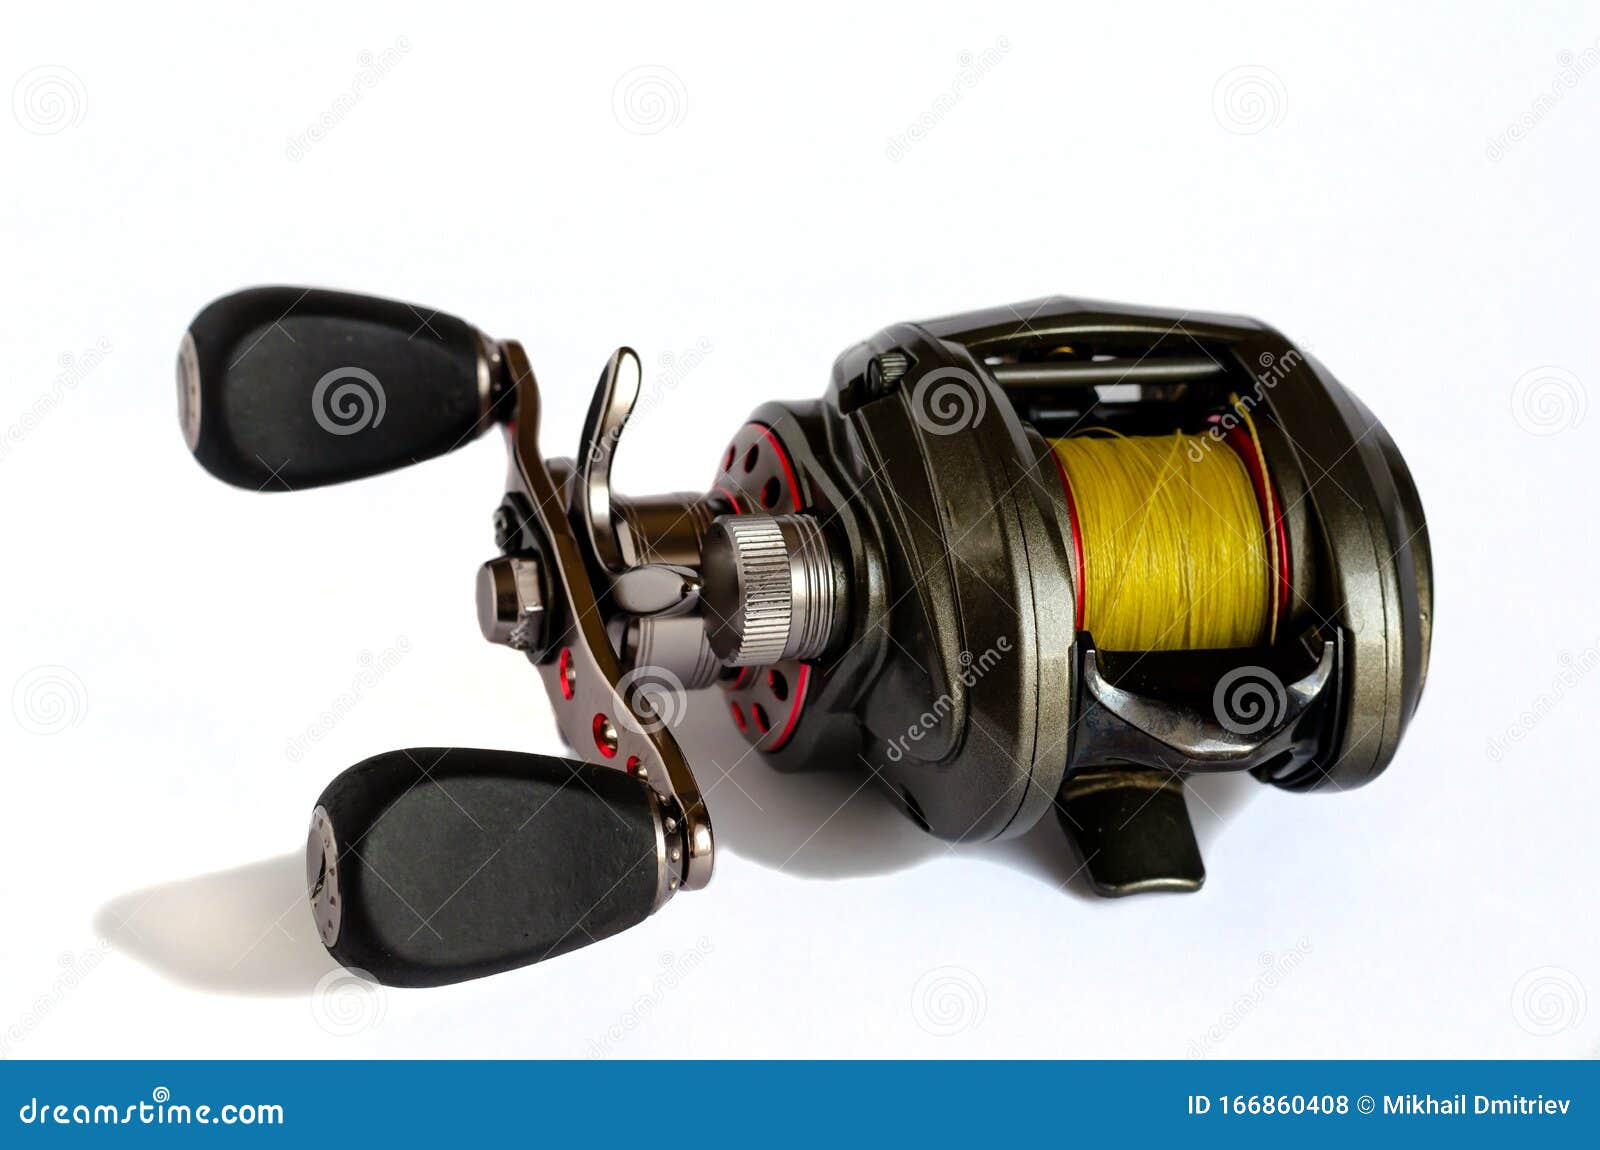 Low Profile Baitcasting Reel. Stock Photo - Image of bait, braking